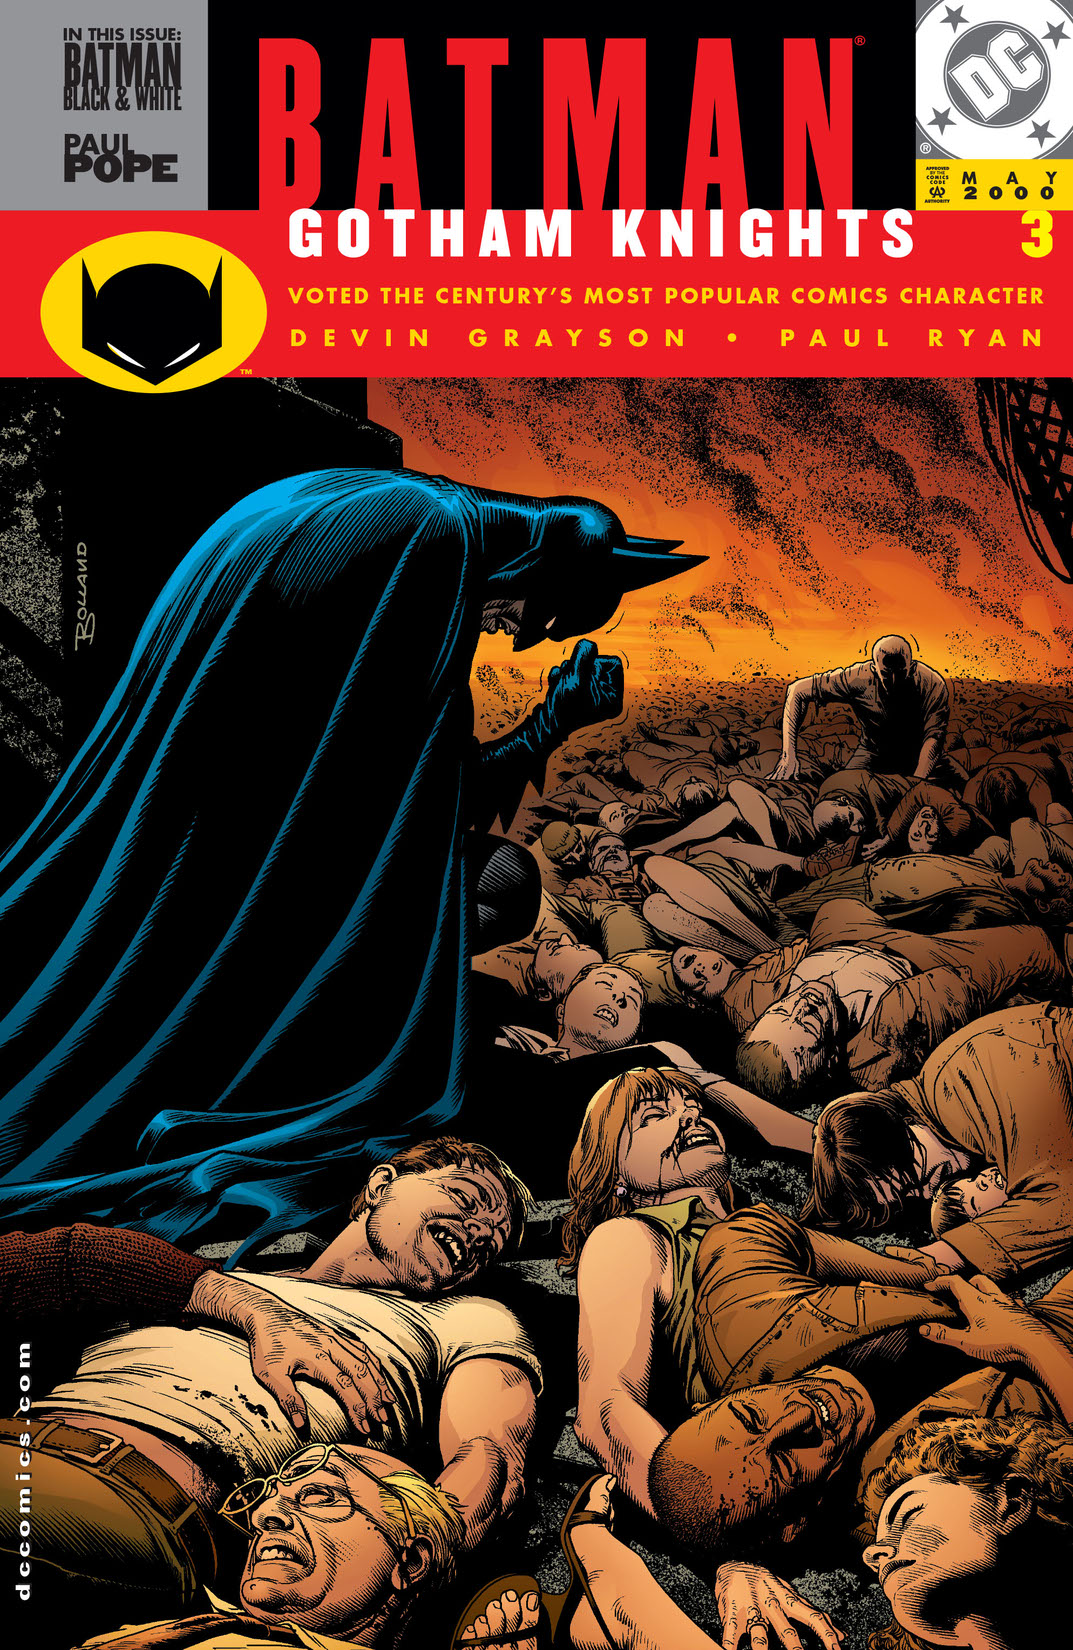 Batman: Gotham Knights #3 preview images